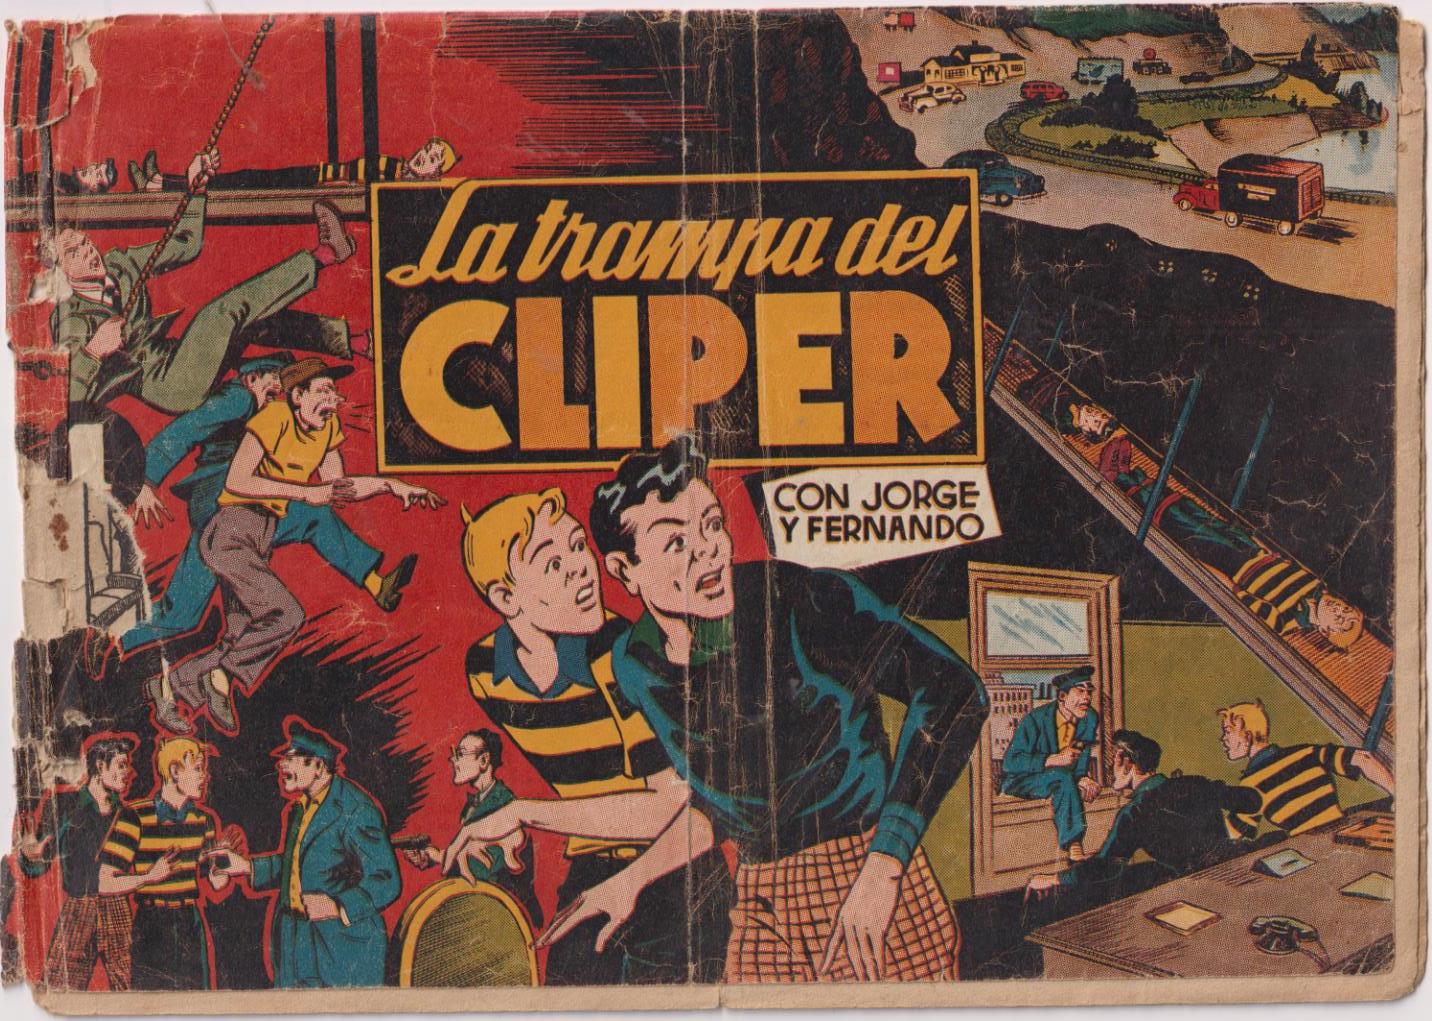 Jorge y Fernando nº 80. La Trampa del Cliper. Hispano americana 1940